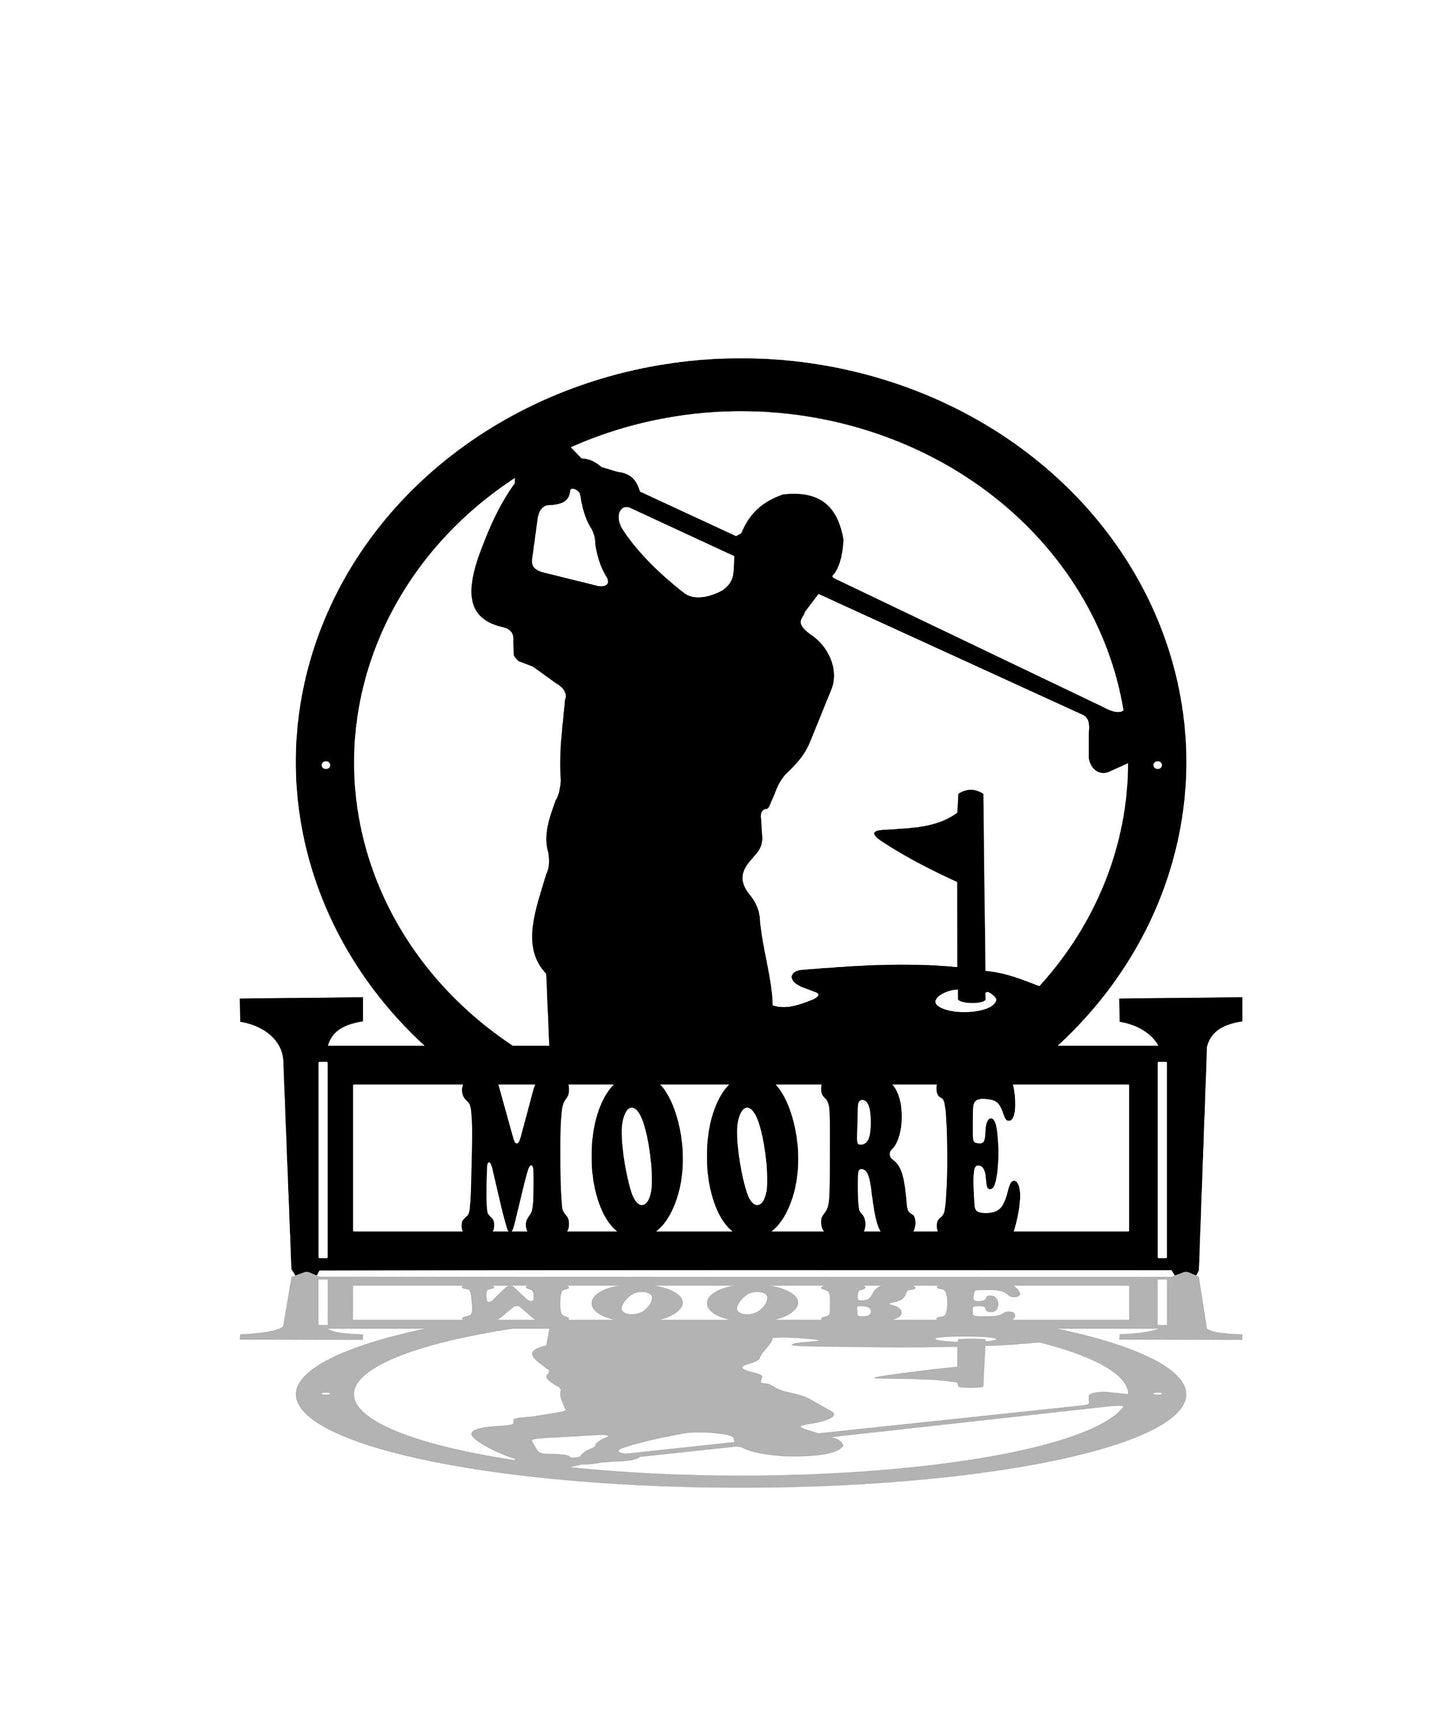 Golfer gift, golf name sign, golf monogram, tee time